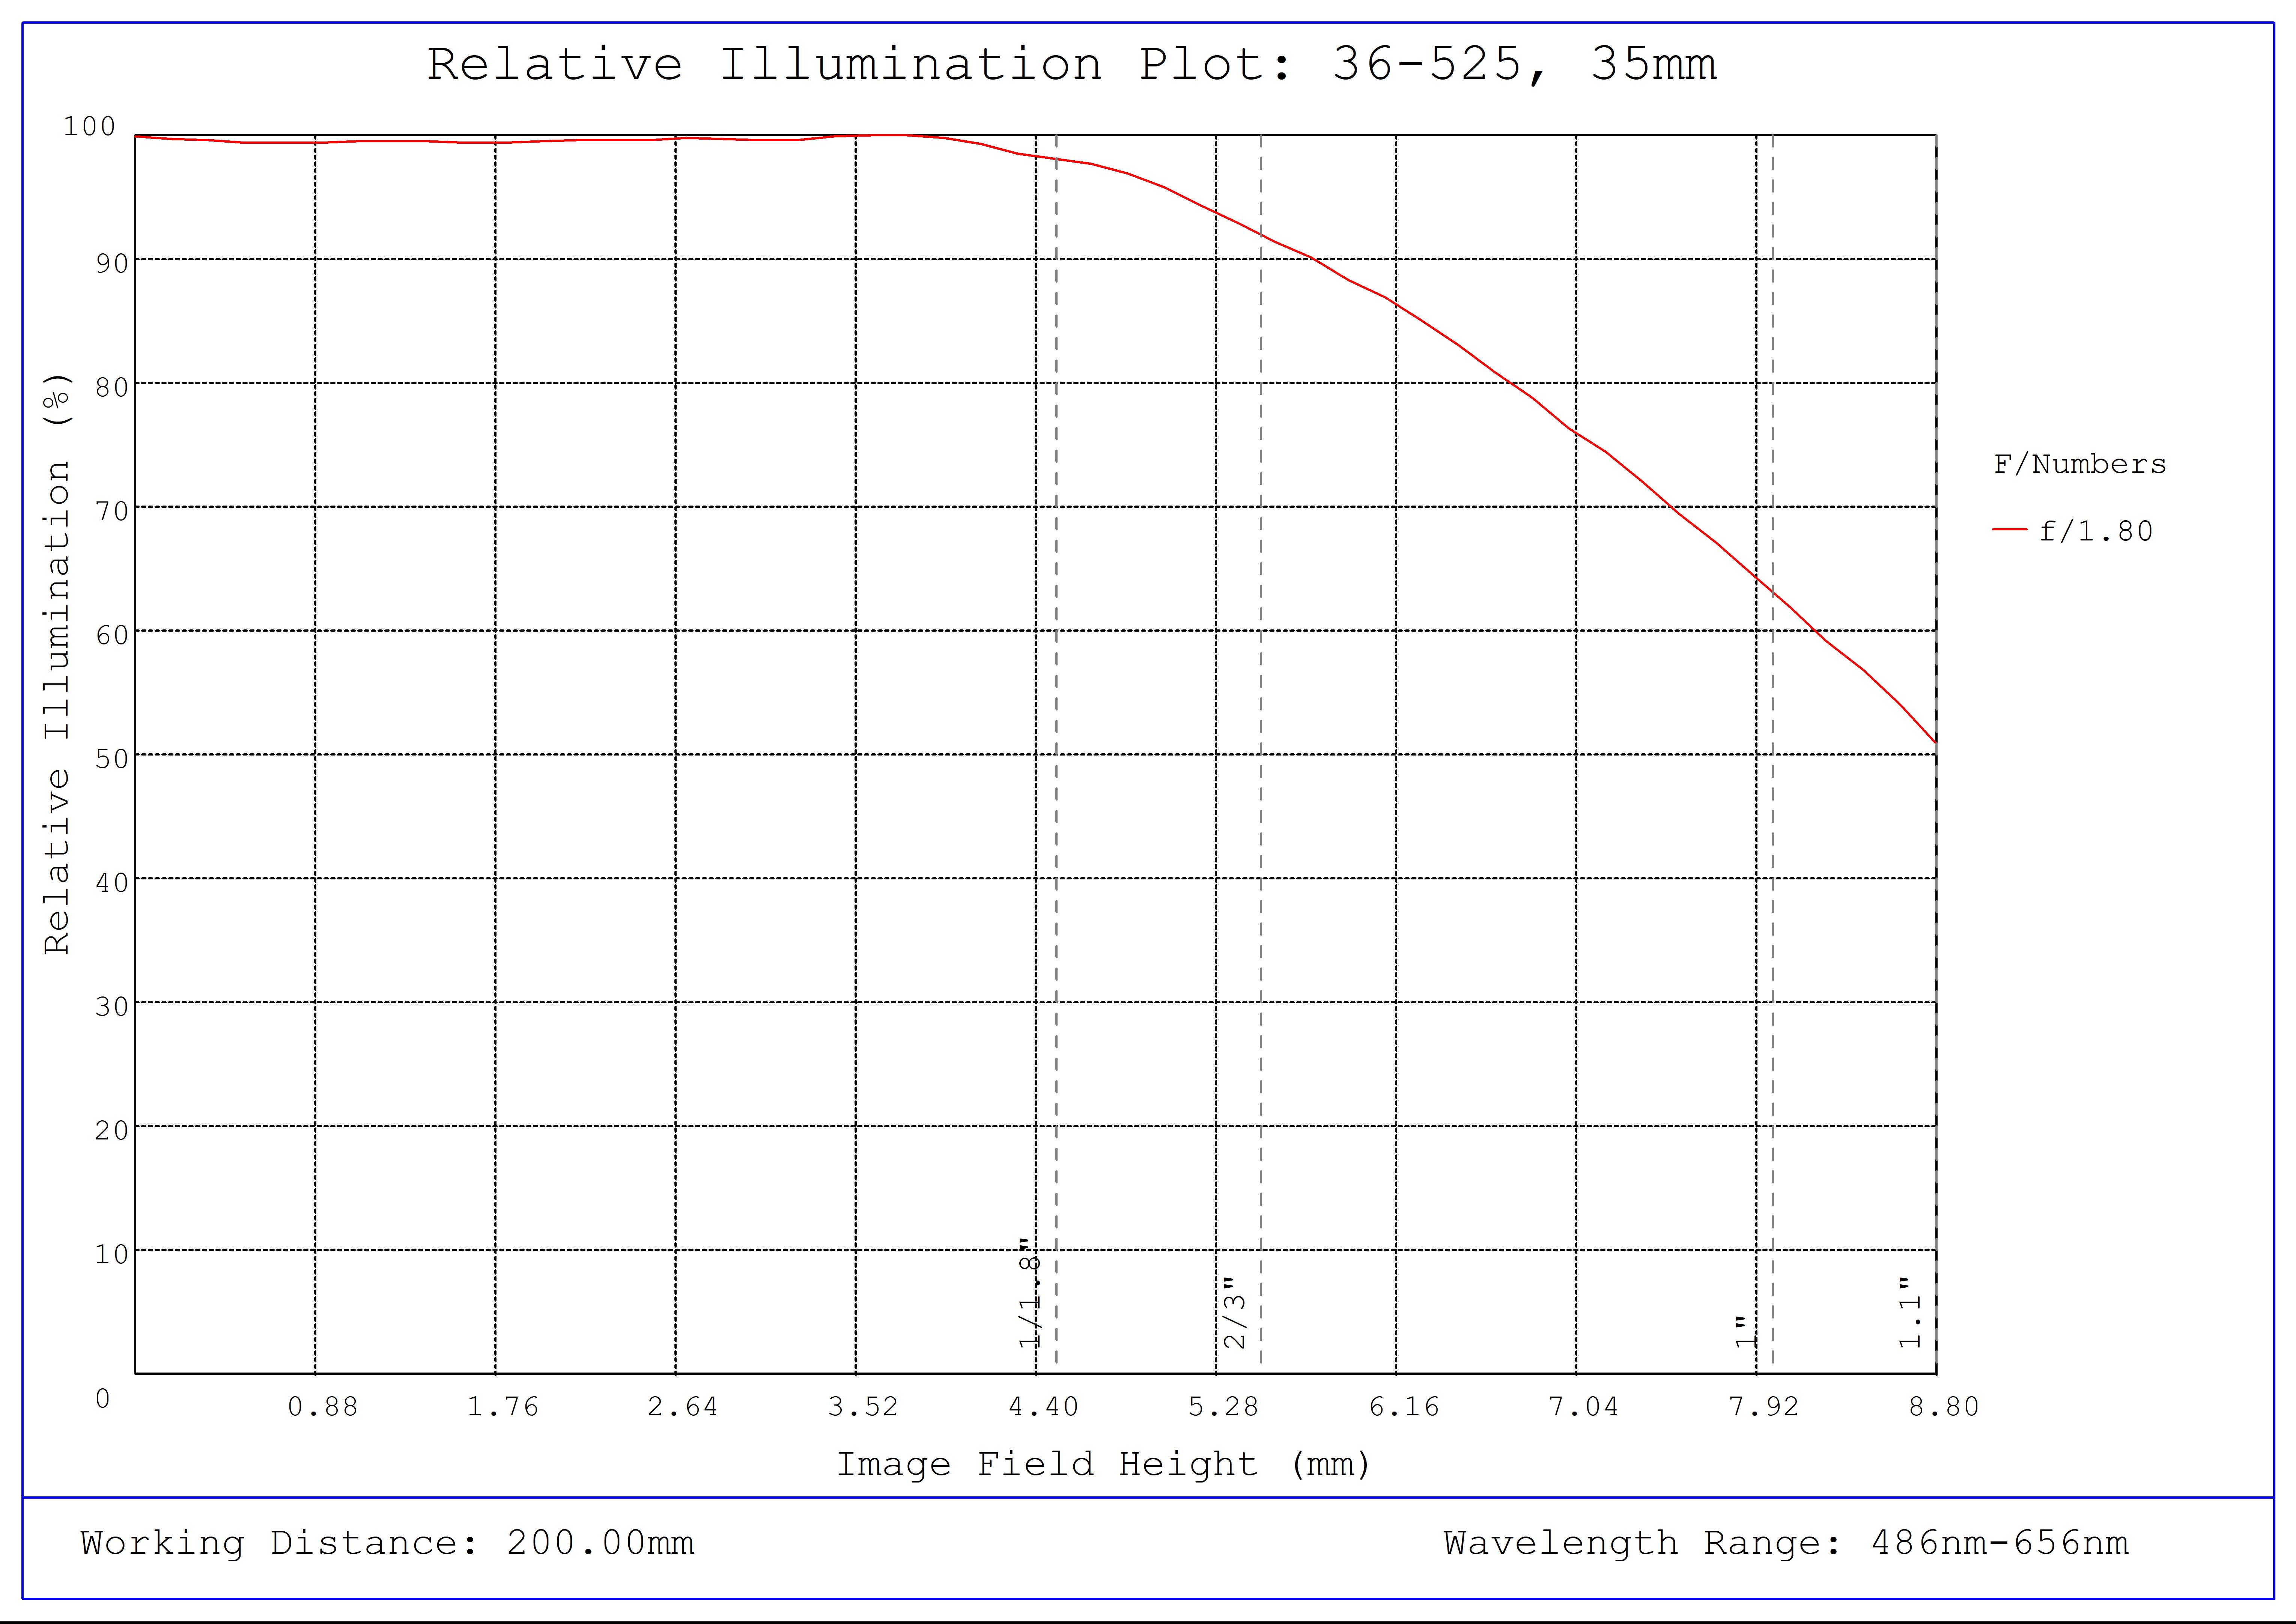 #36-525, 35mm f/1.8, HPr Series Fixed Focal Length Lens, Relative Illumination Plot